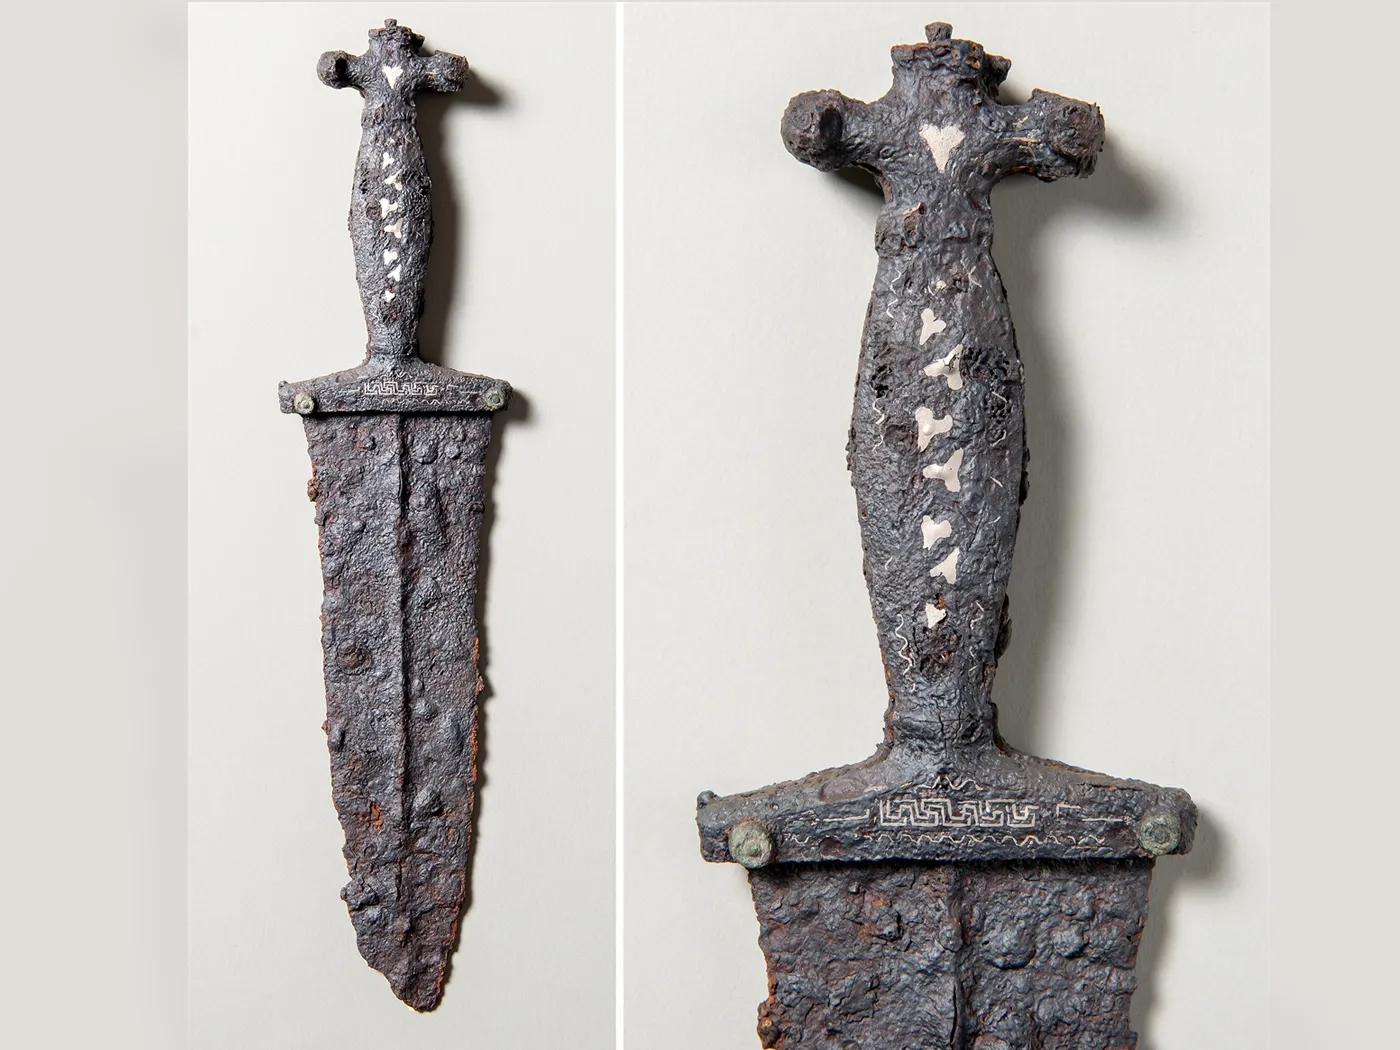 Amateur Archaeologist in Switzerland Unearths 2,000-Year-Old Roman Dagger |  Smart News| Smithsonian Magazine